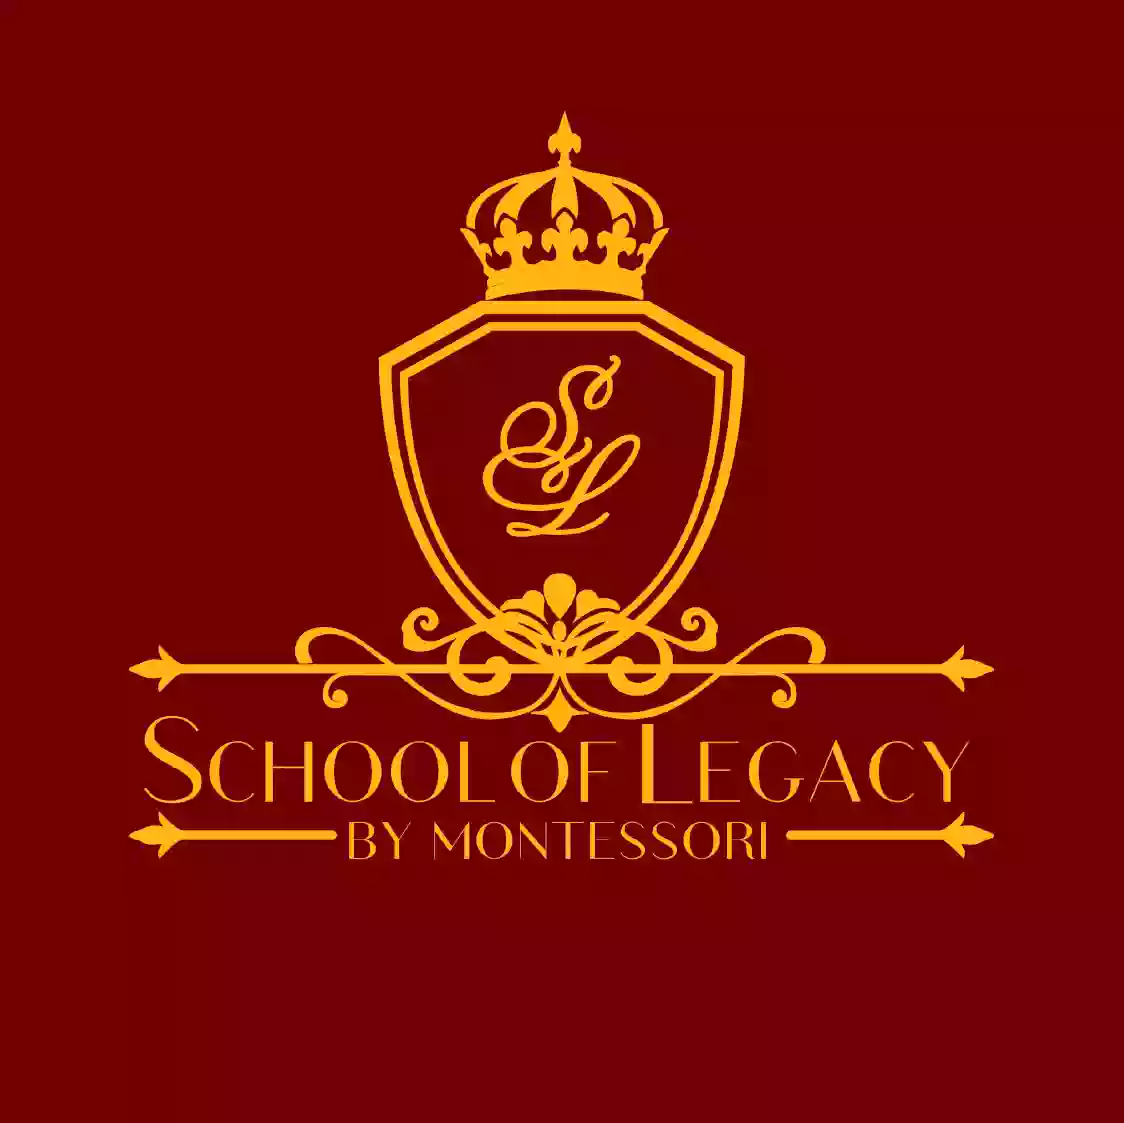 School of Legacy by Montessori